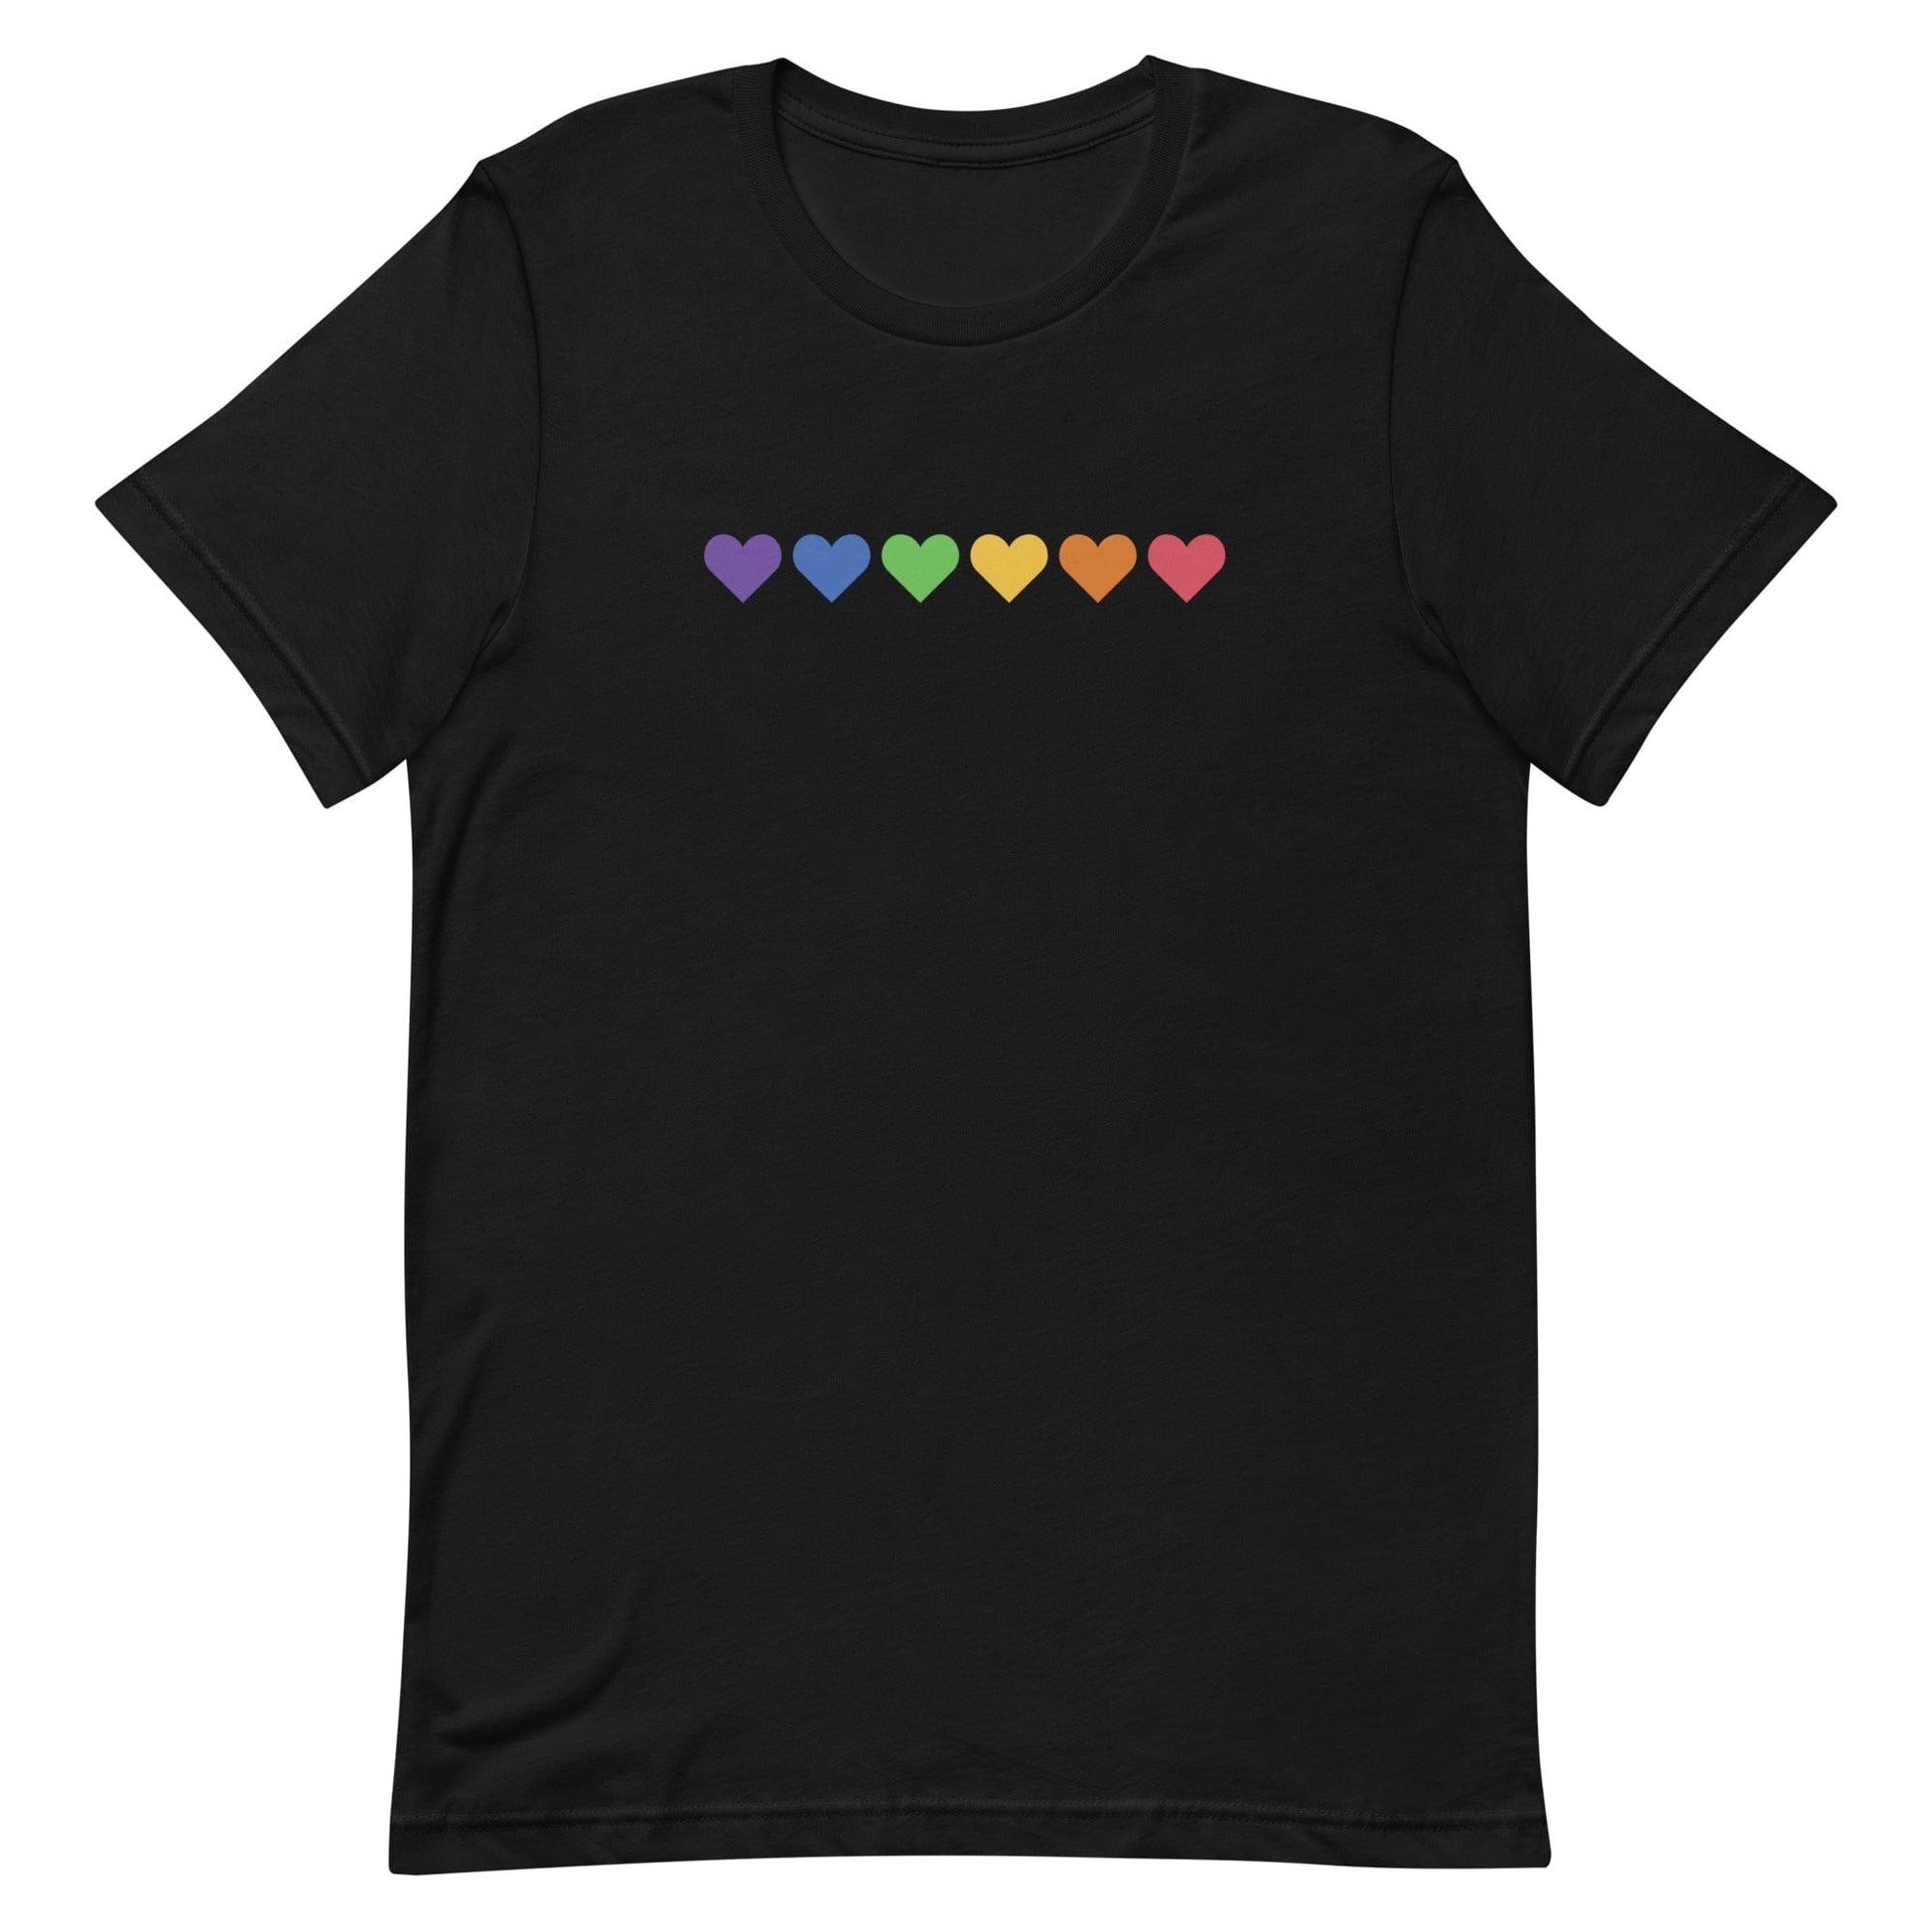 front-black-genderless-hearts-pride-t-shirt-by-feminist-define